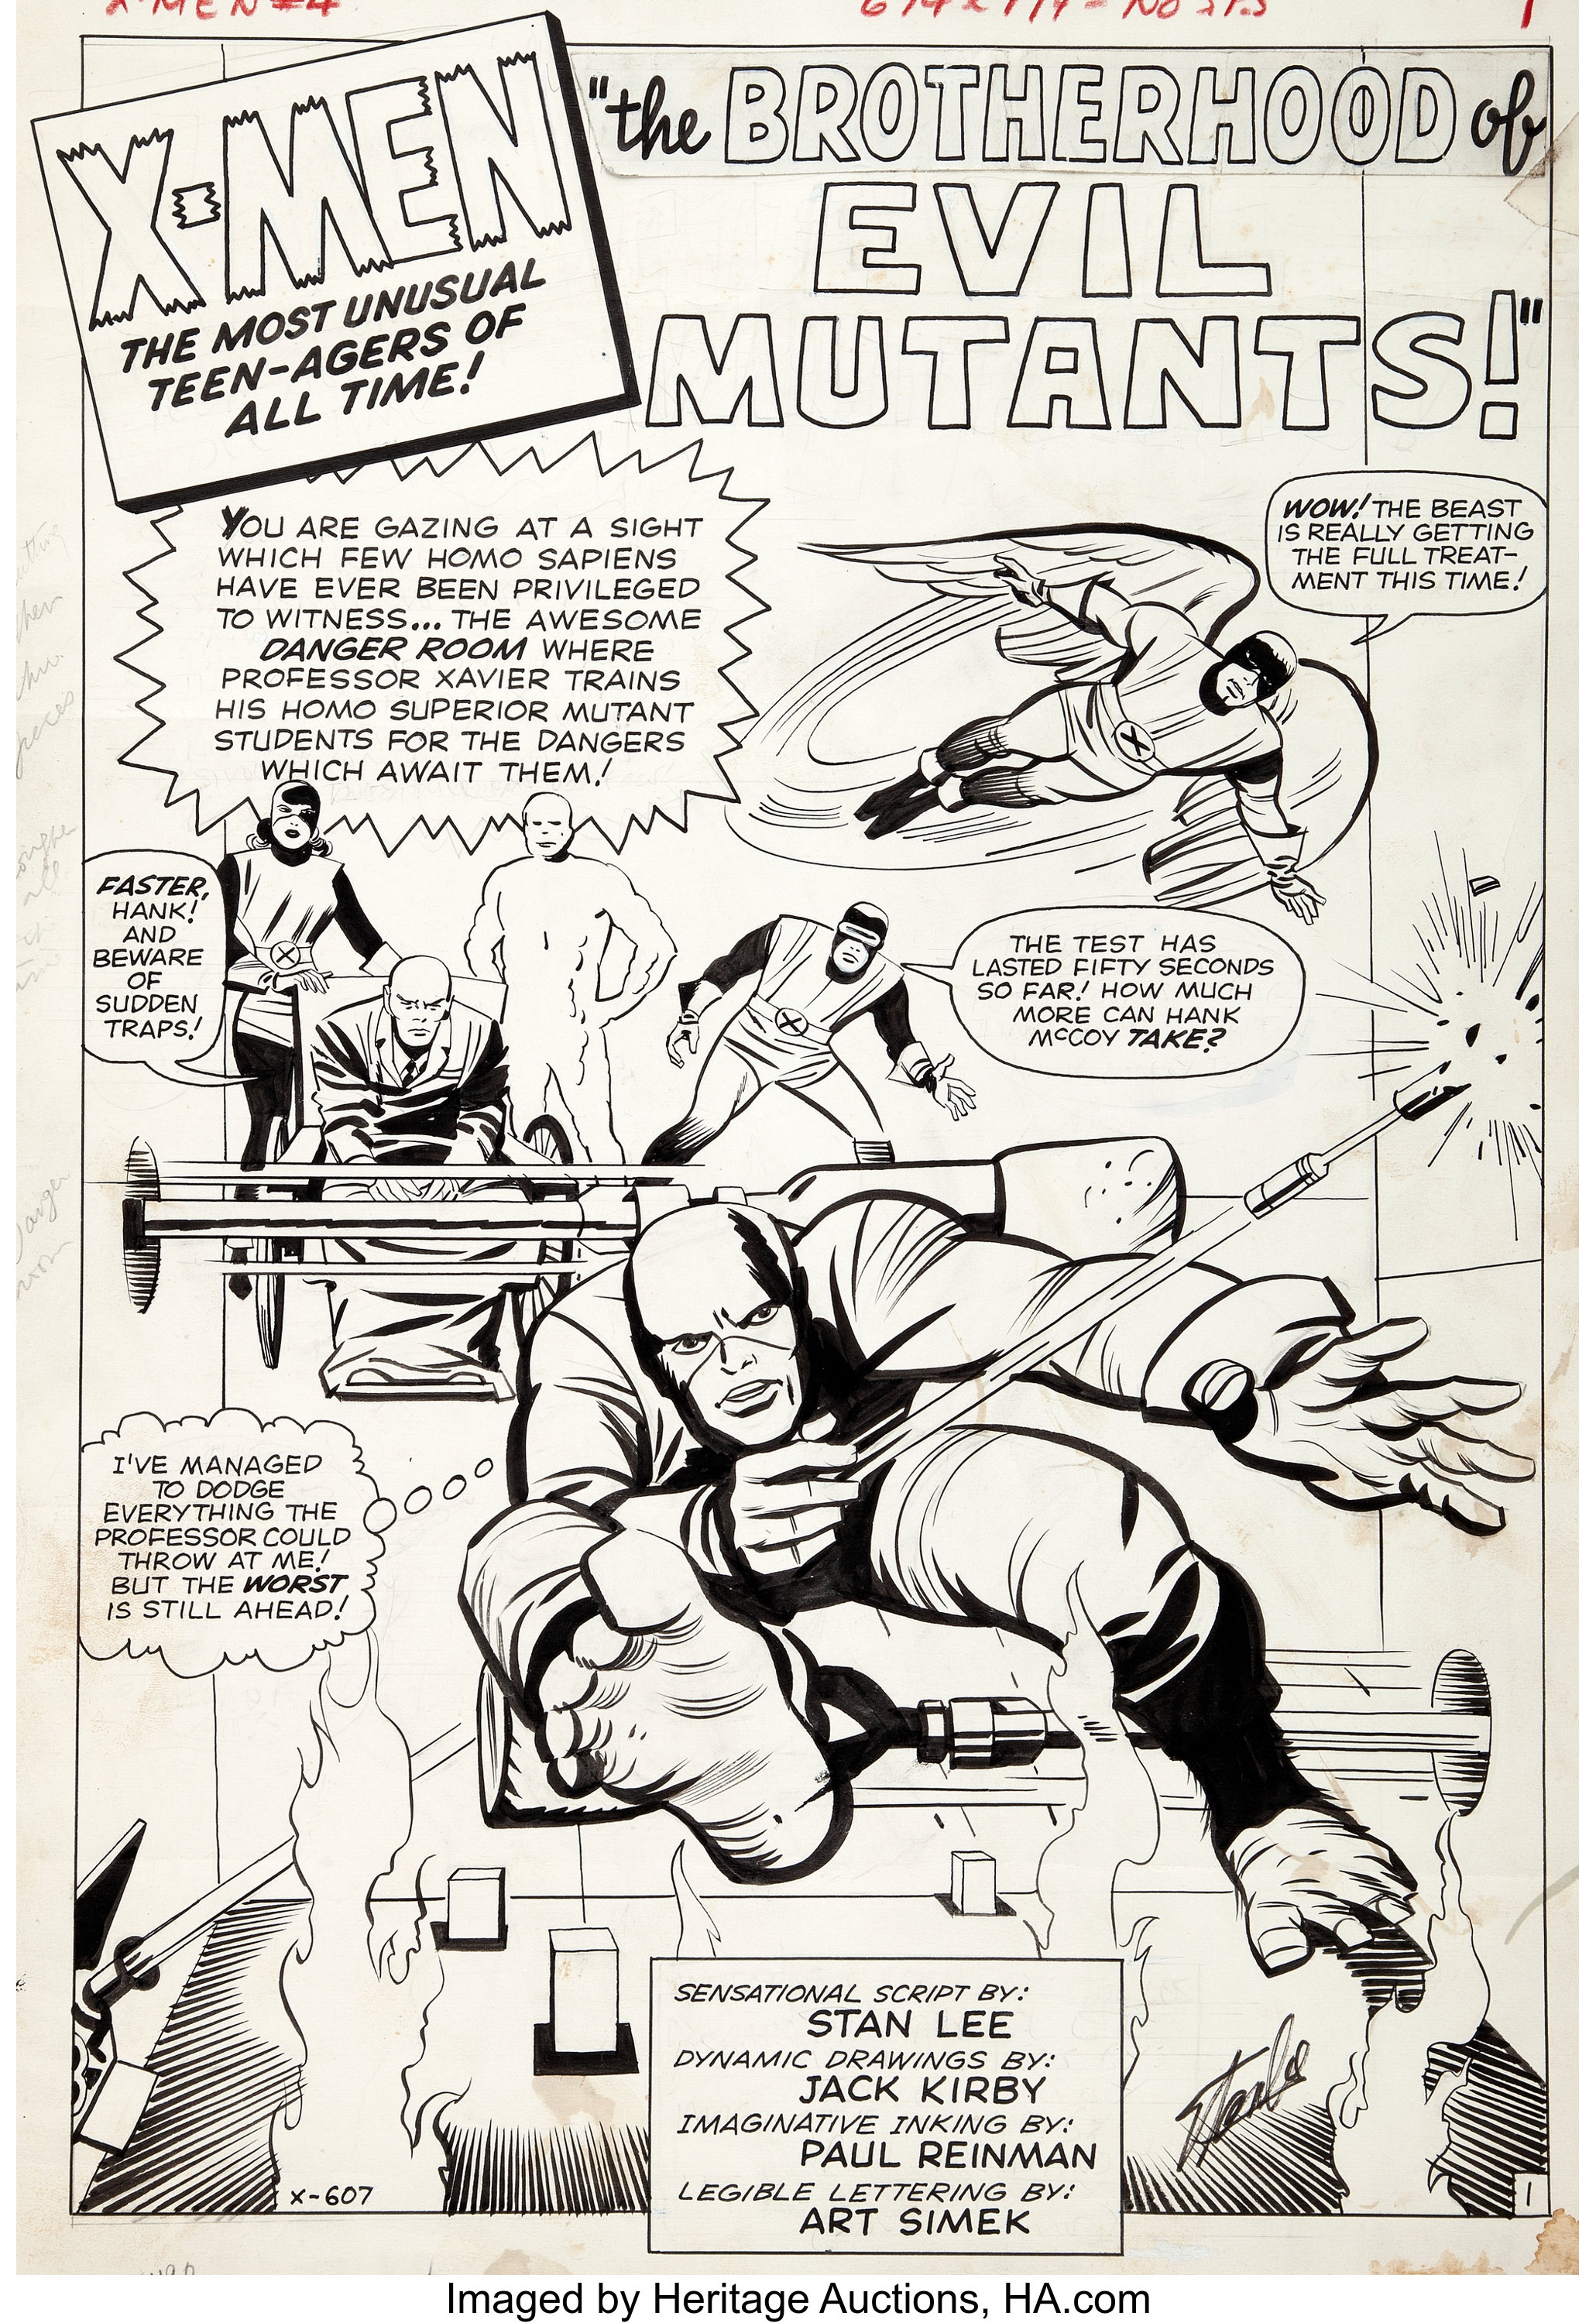 Jack Kirby and Paul Reinman X-Men #4 Splash Page Original Art | Lot #91019  | Heritage Auctions